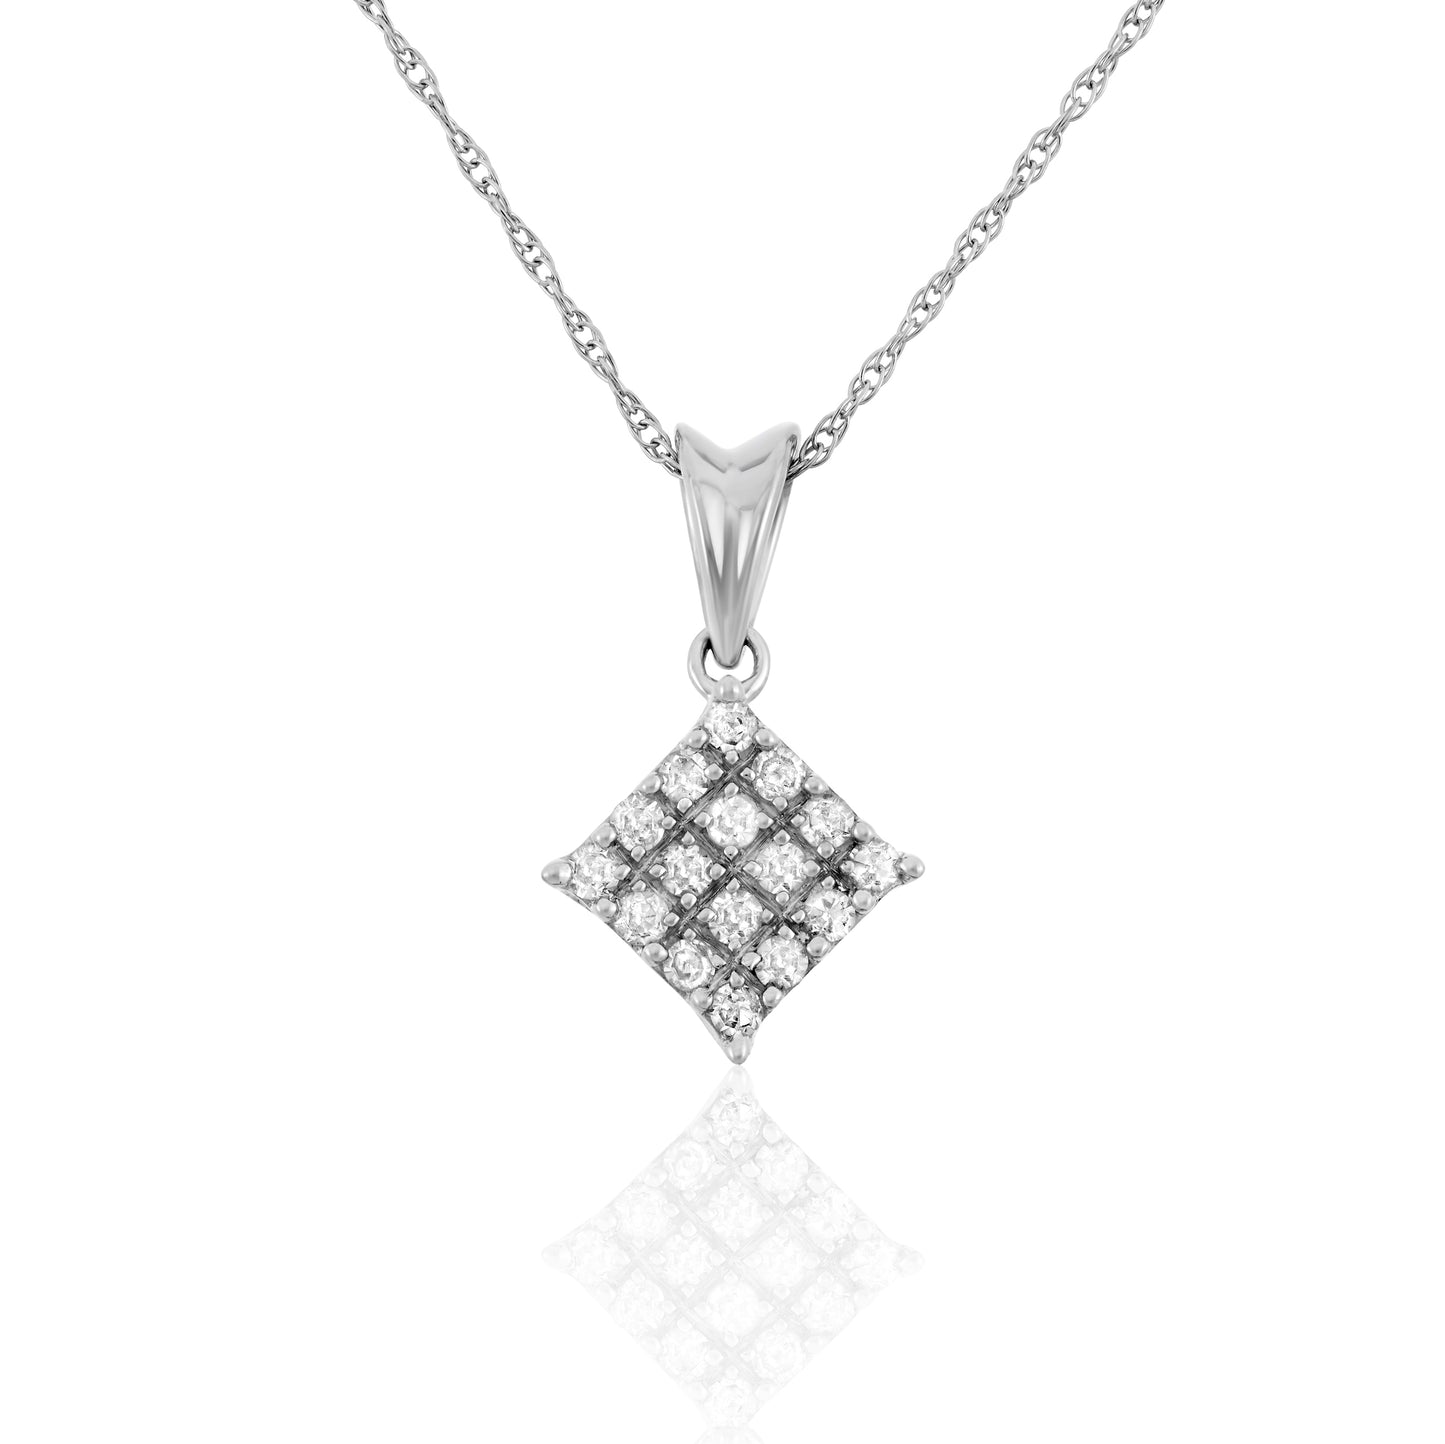 10k White Gold 0.20 ct TDW White Diamond Square Necklace